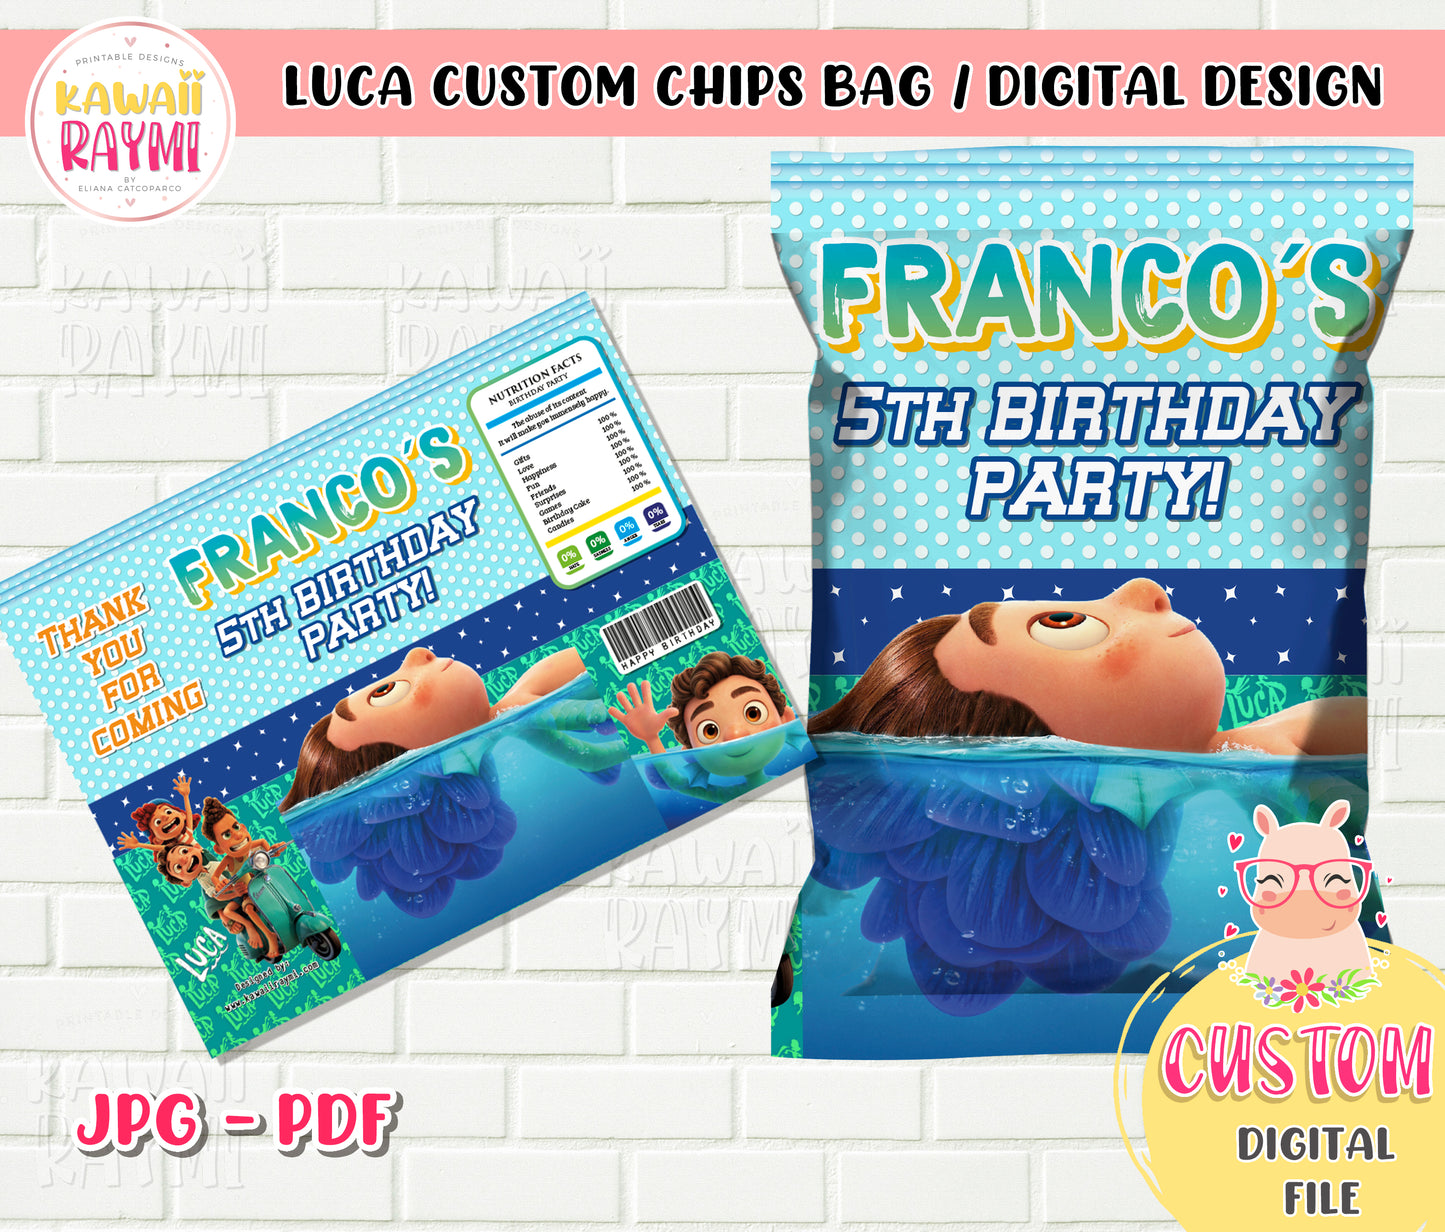 Luca Disney custom Chips bag -LUCA custom chips bag DIGITAL FILE